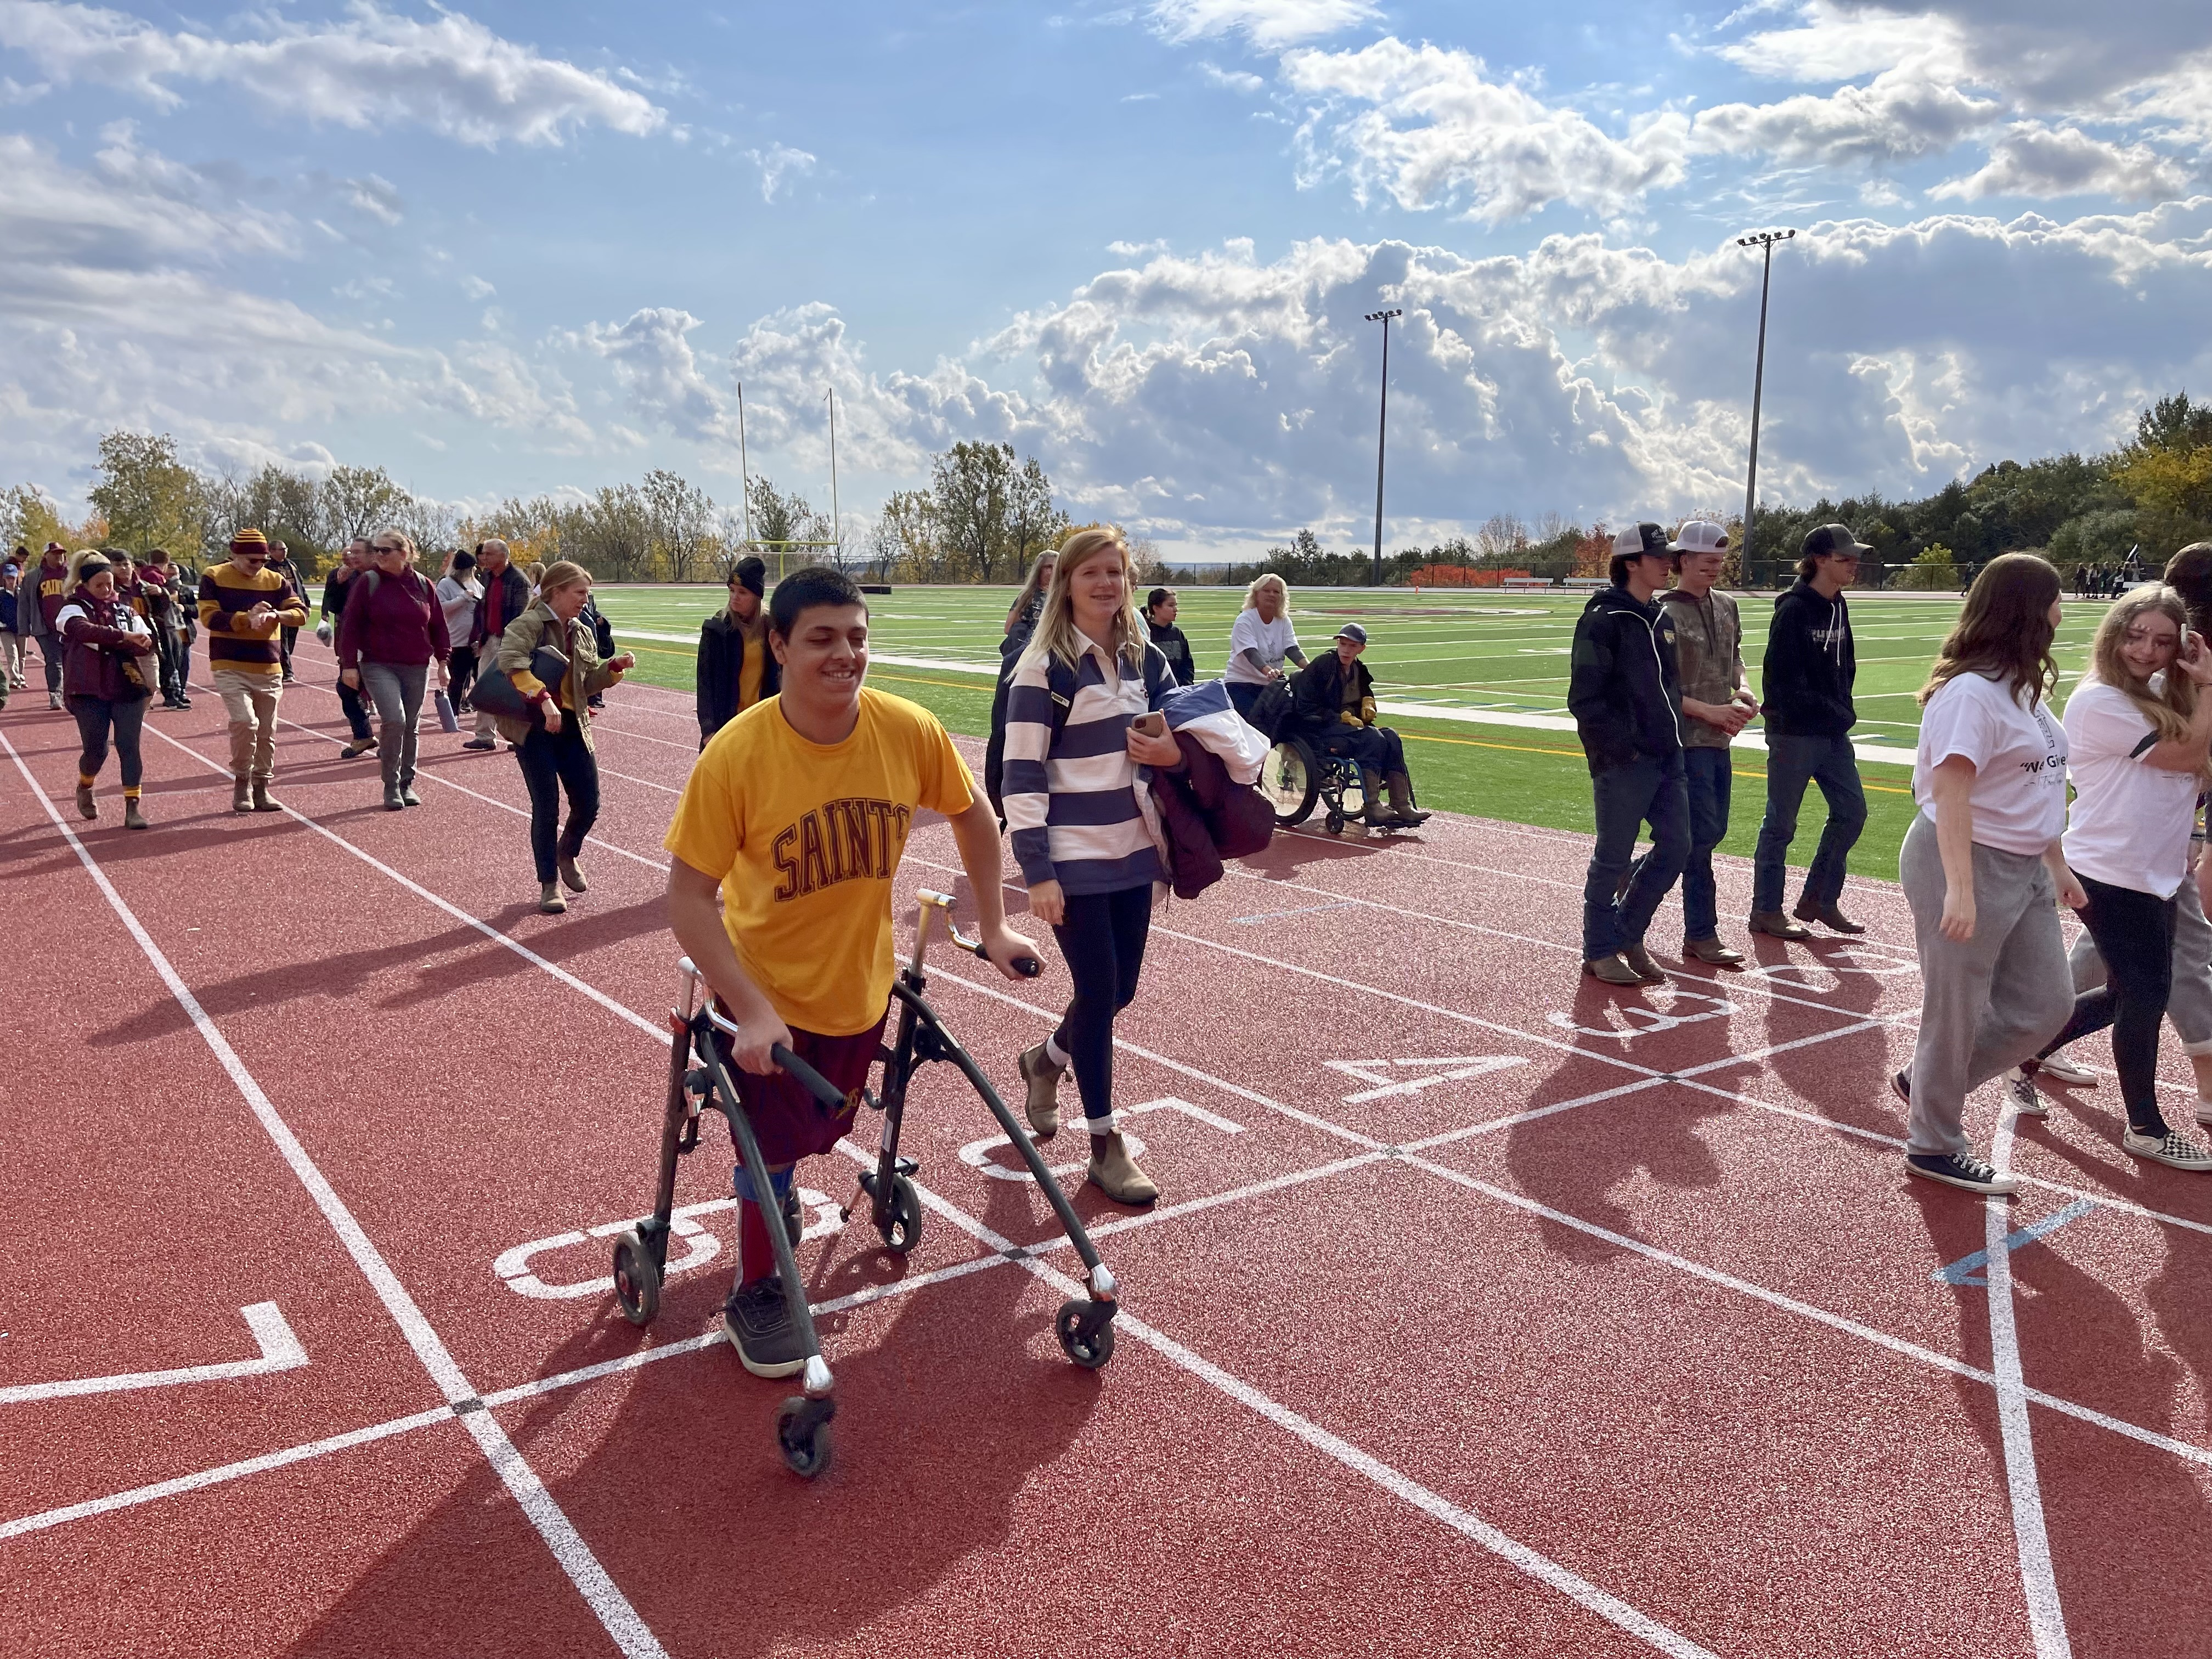 Students walk around a track